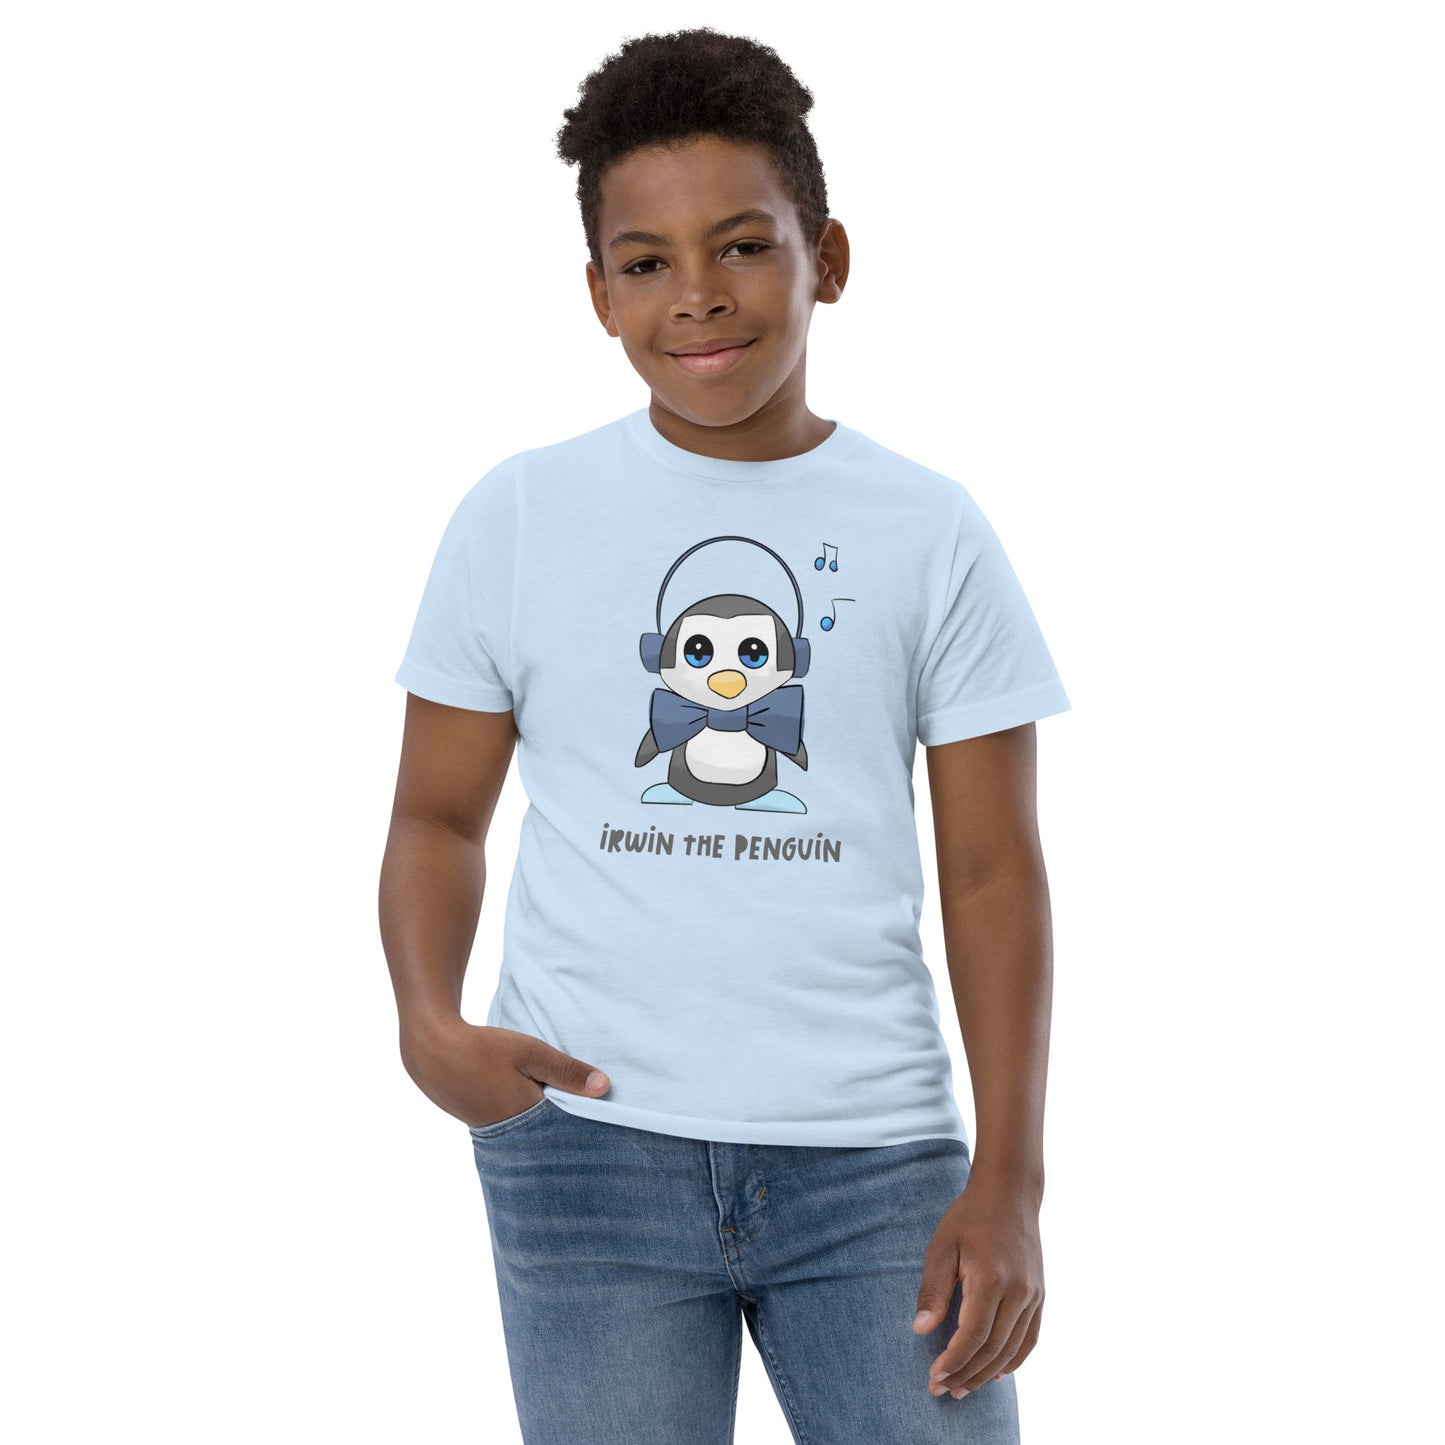 Irwin The Penguin Kid's T-Shirt